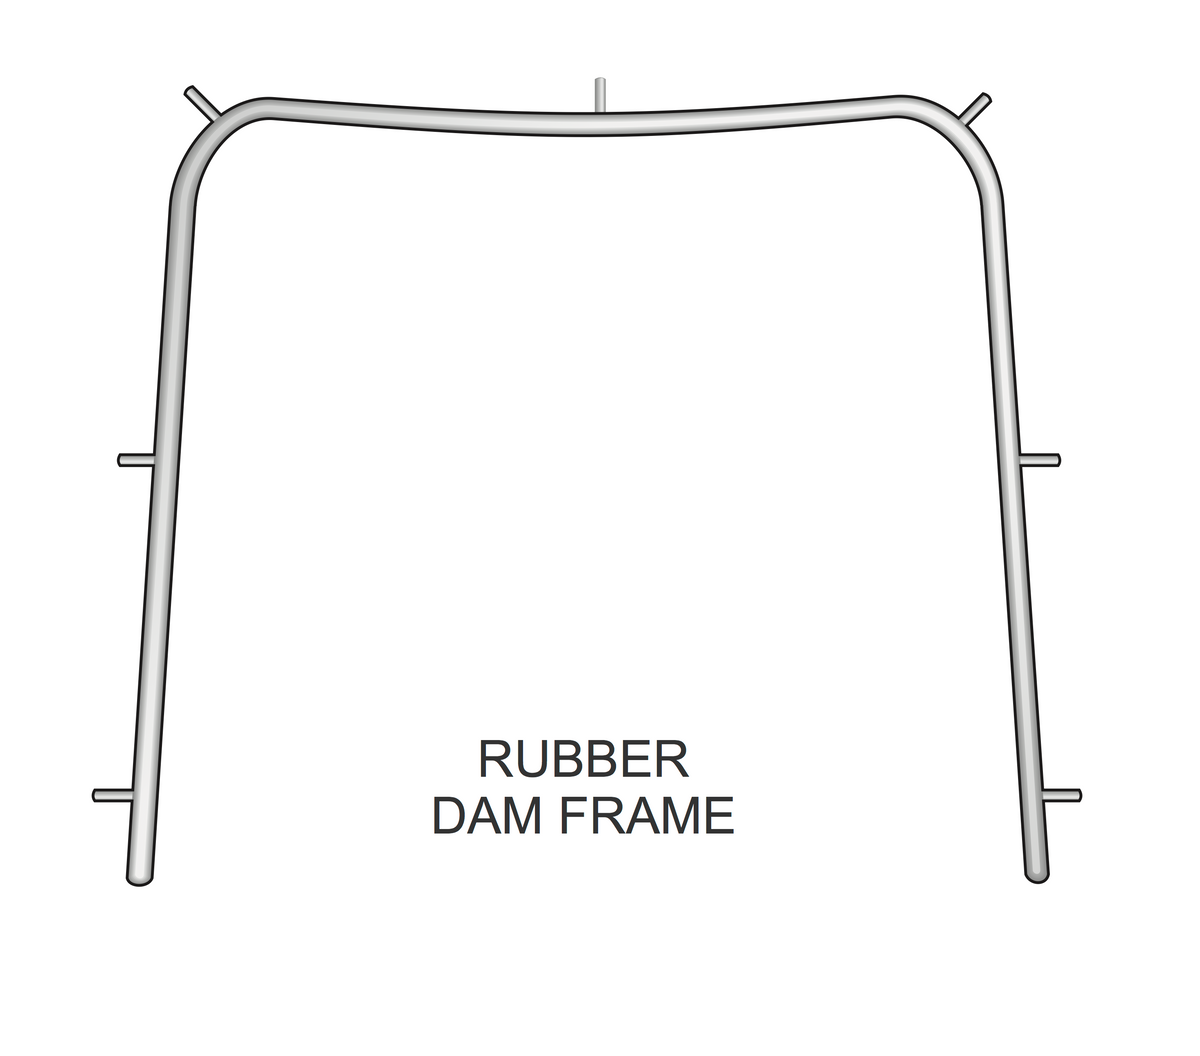 Child, 5 inch/13CM Rubber Dam Frame - HiTeck Medical Instruments